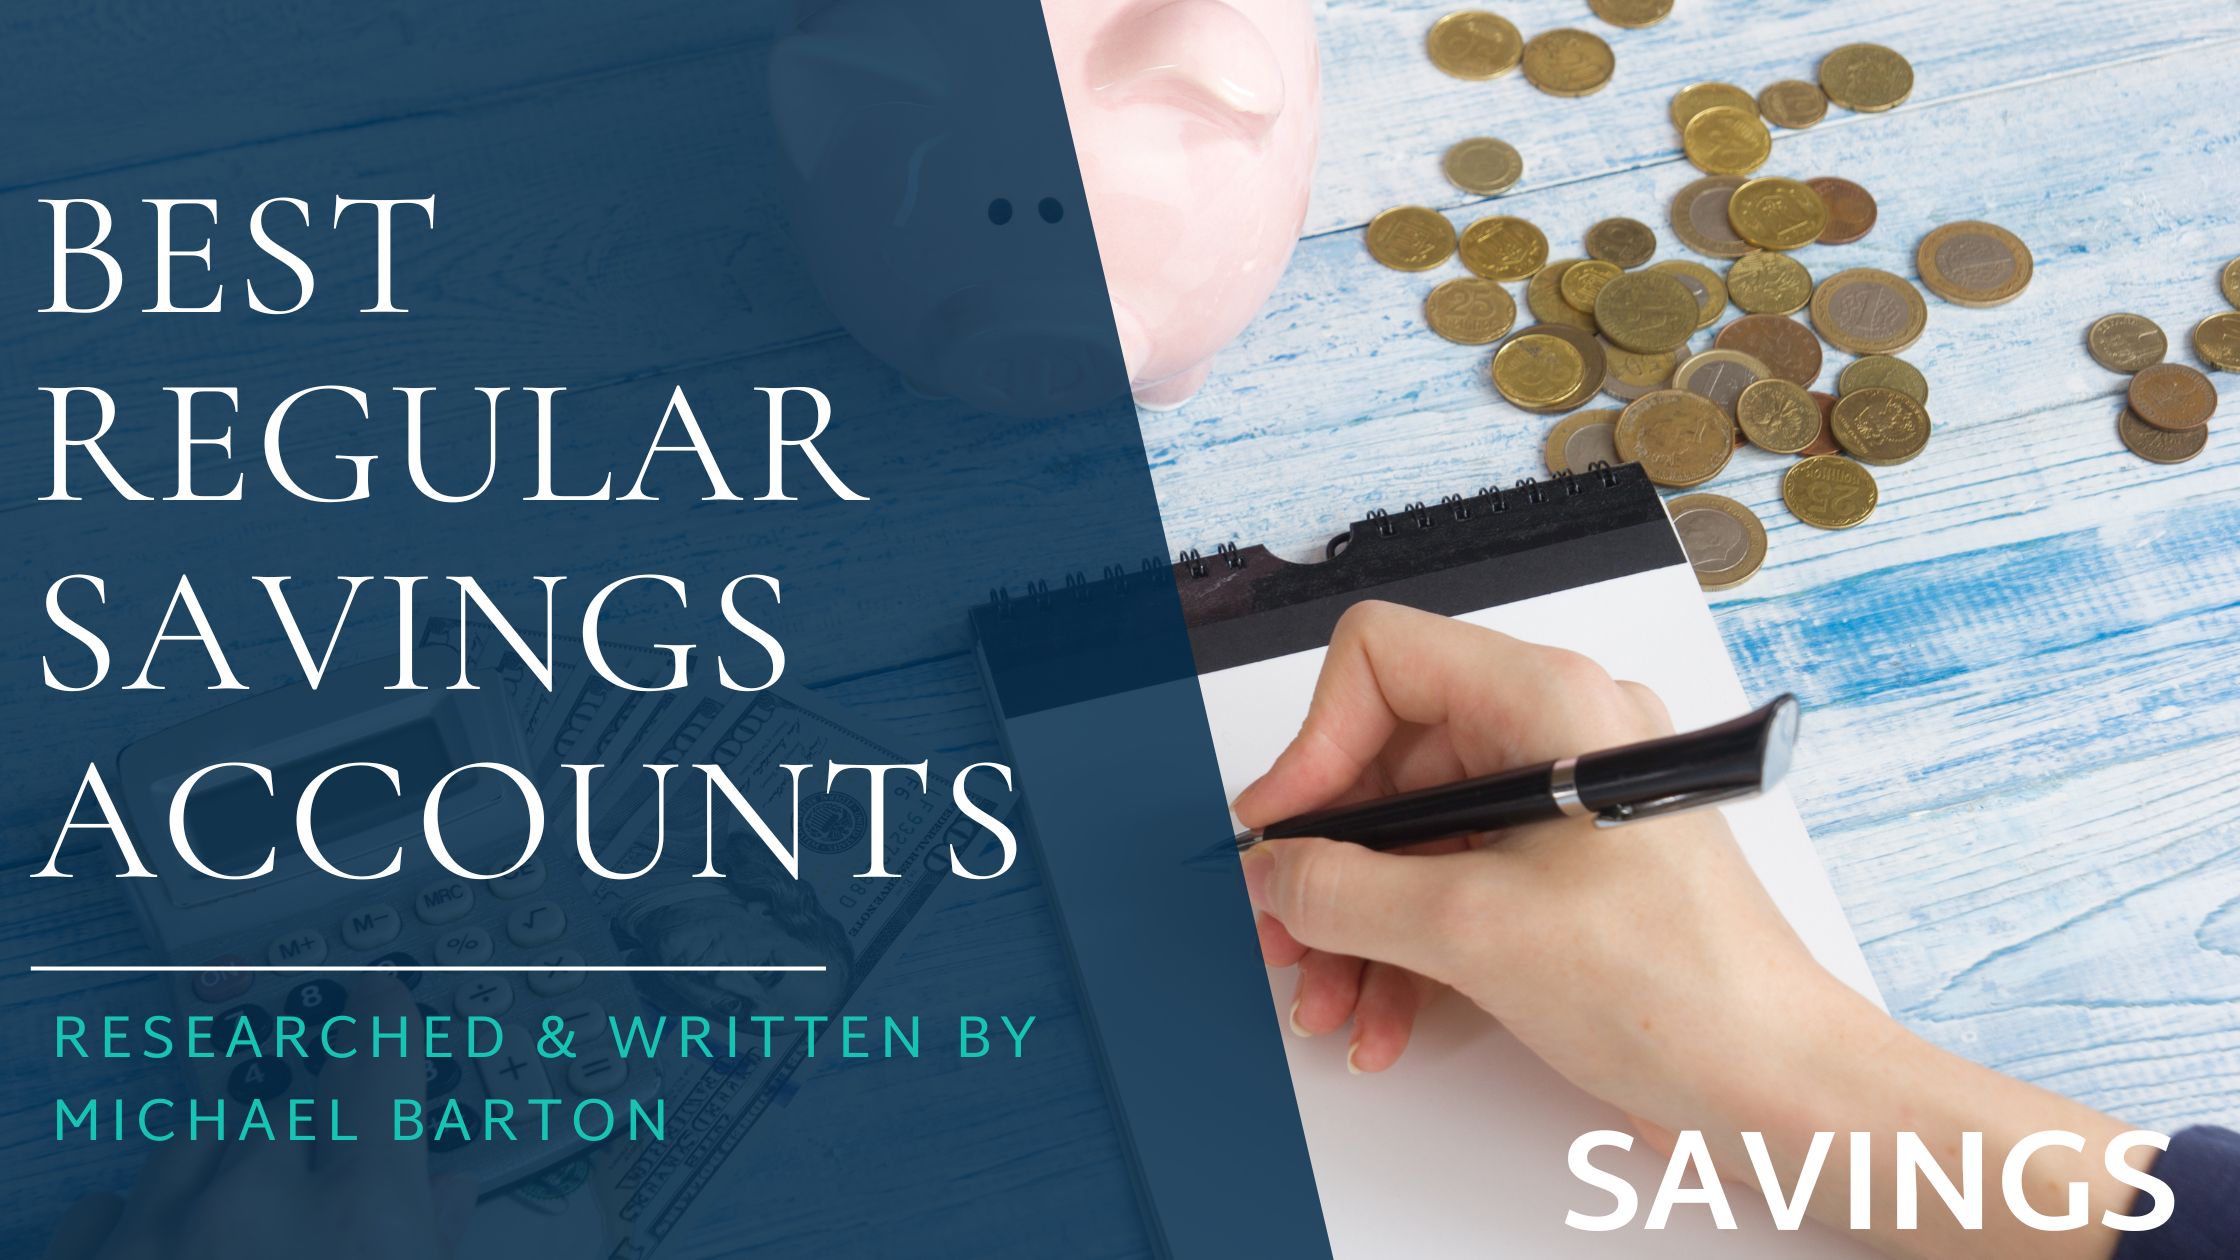 Regular Savings Accounts feature image